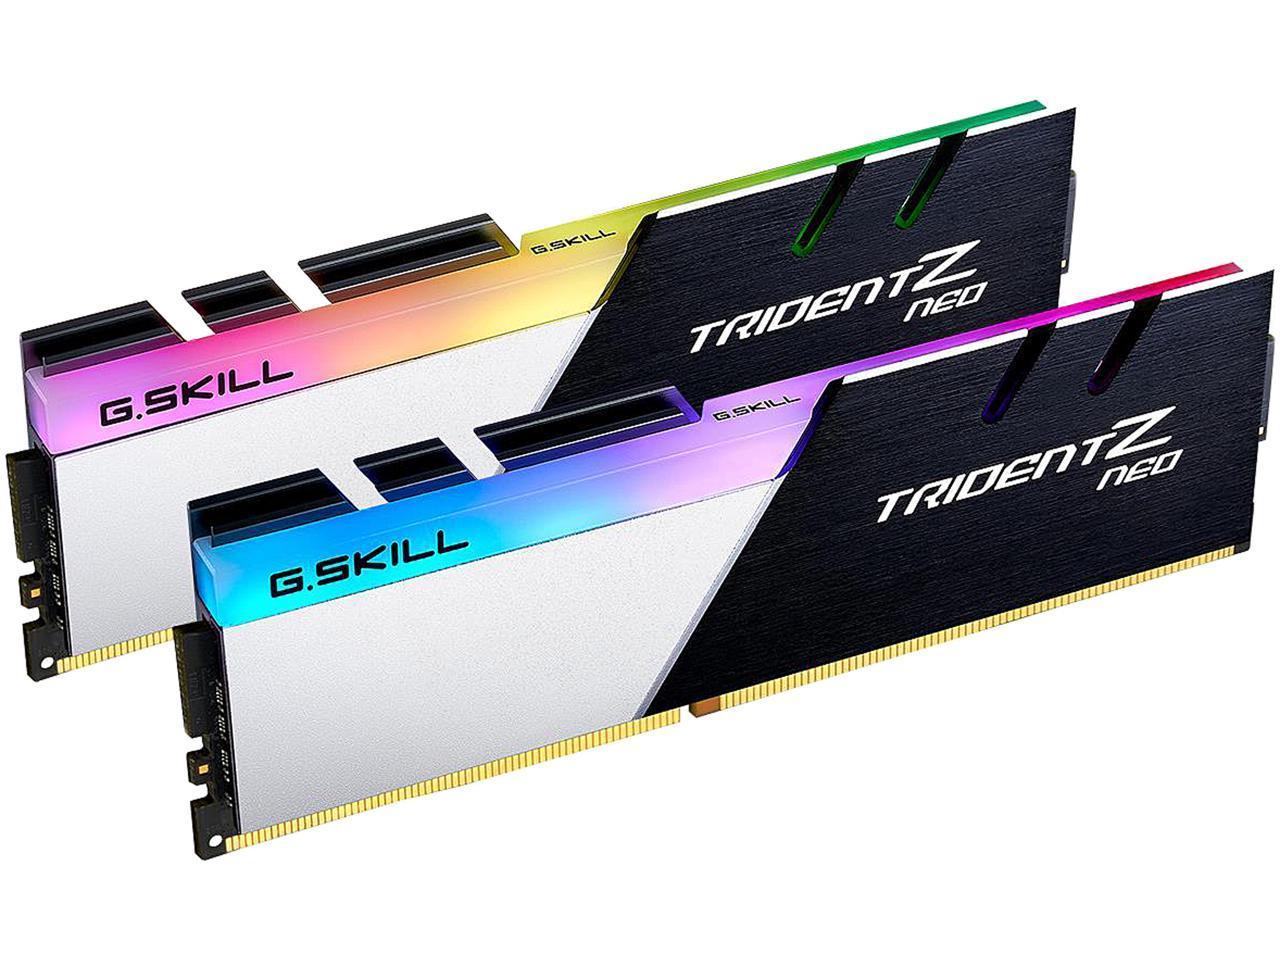 G.Skill Trident Z Neo 32GB DDR4 Desktop Memory for $142.19 Shipped